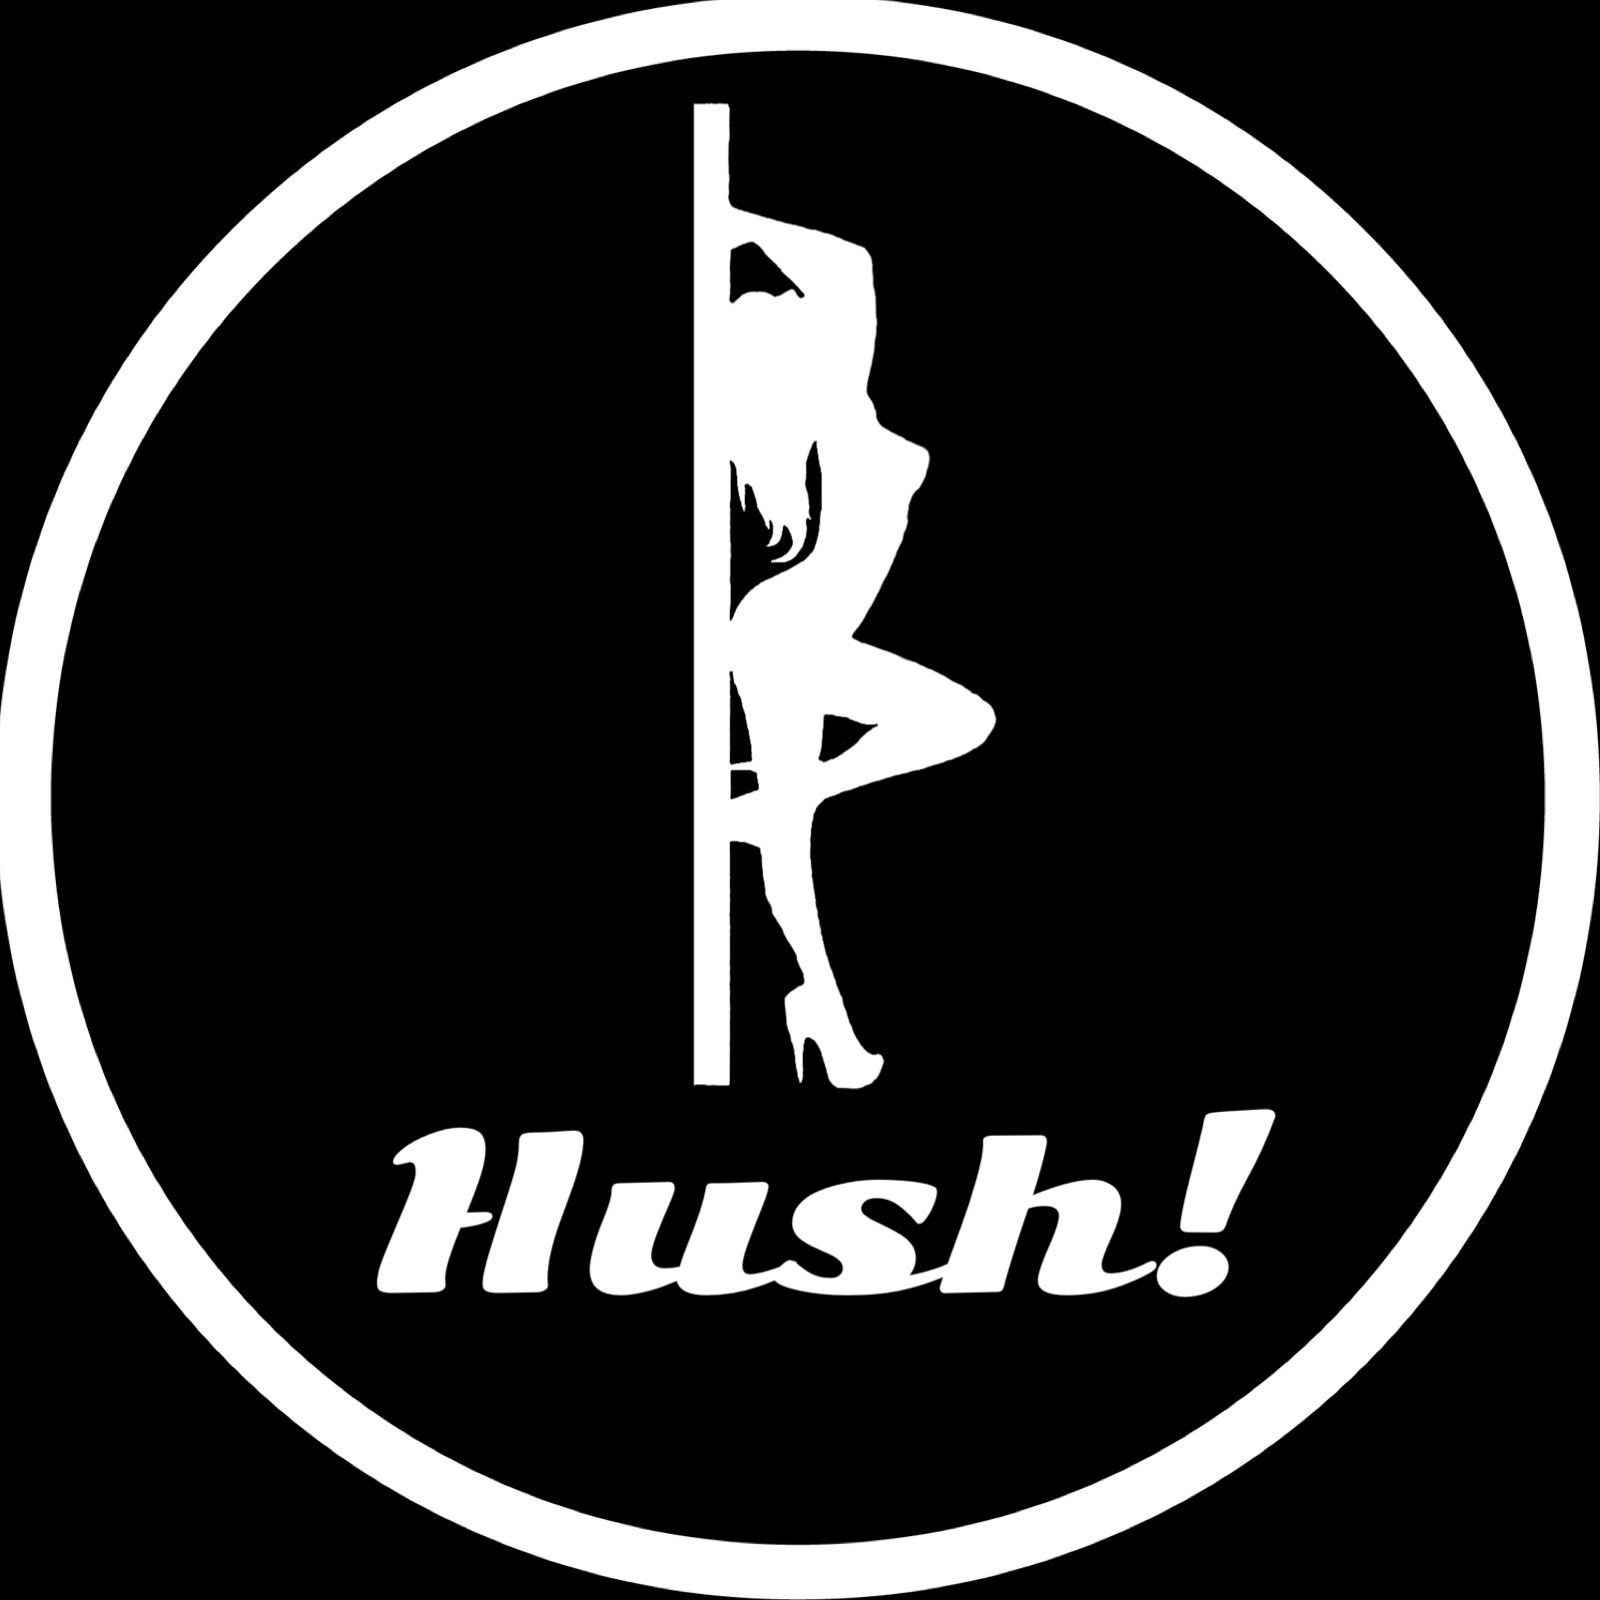 Hush! - Hush! Vol. 74- Focus on Filteroff